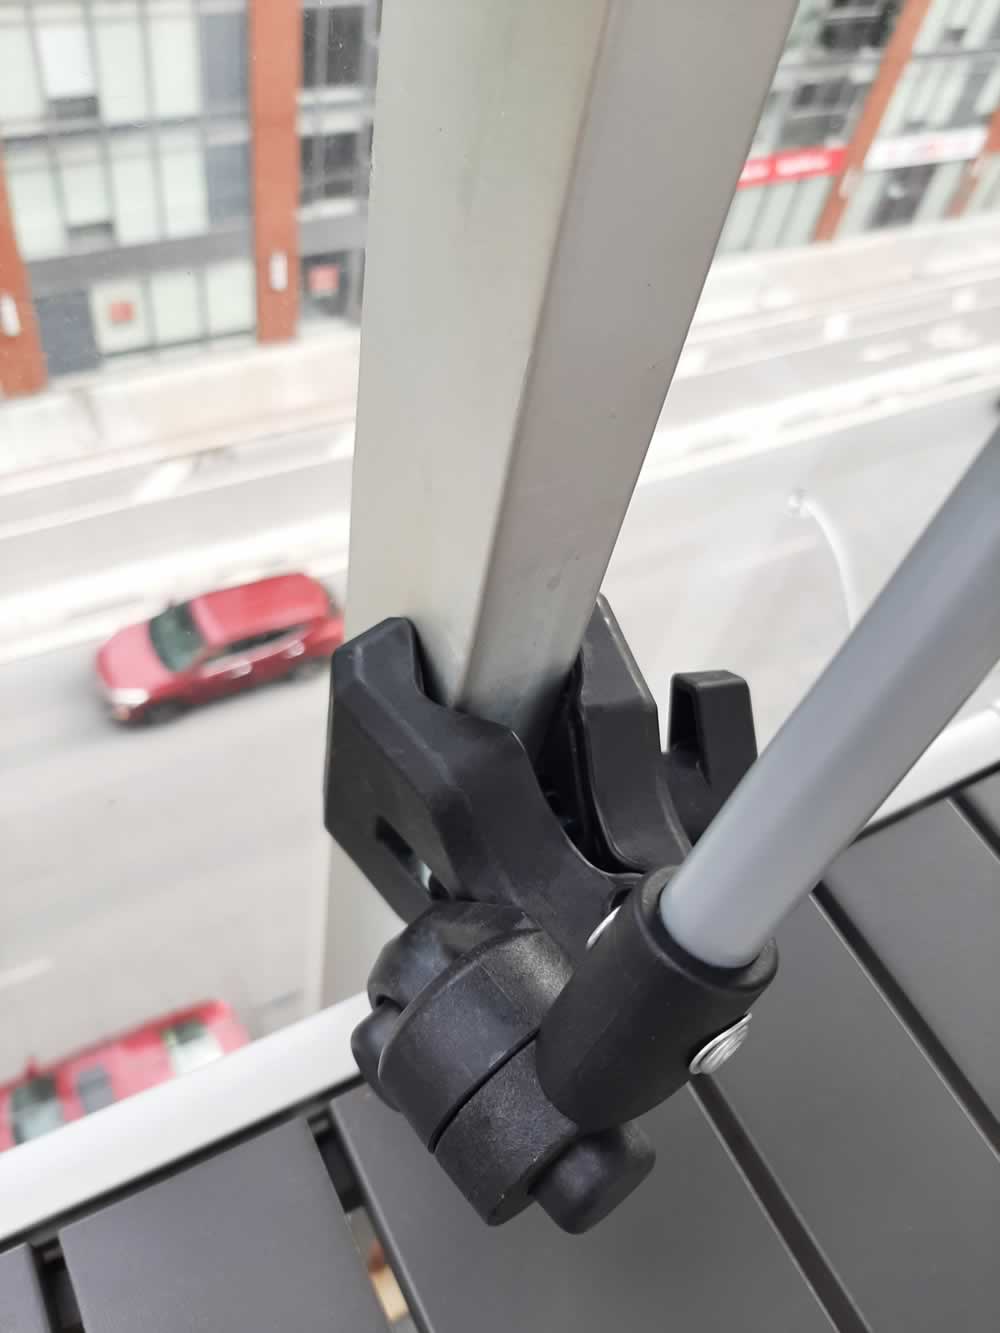 Versa-Brella clamp on balcony rail.